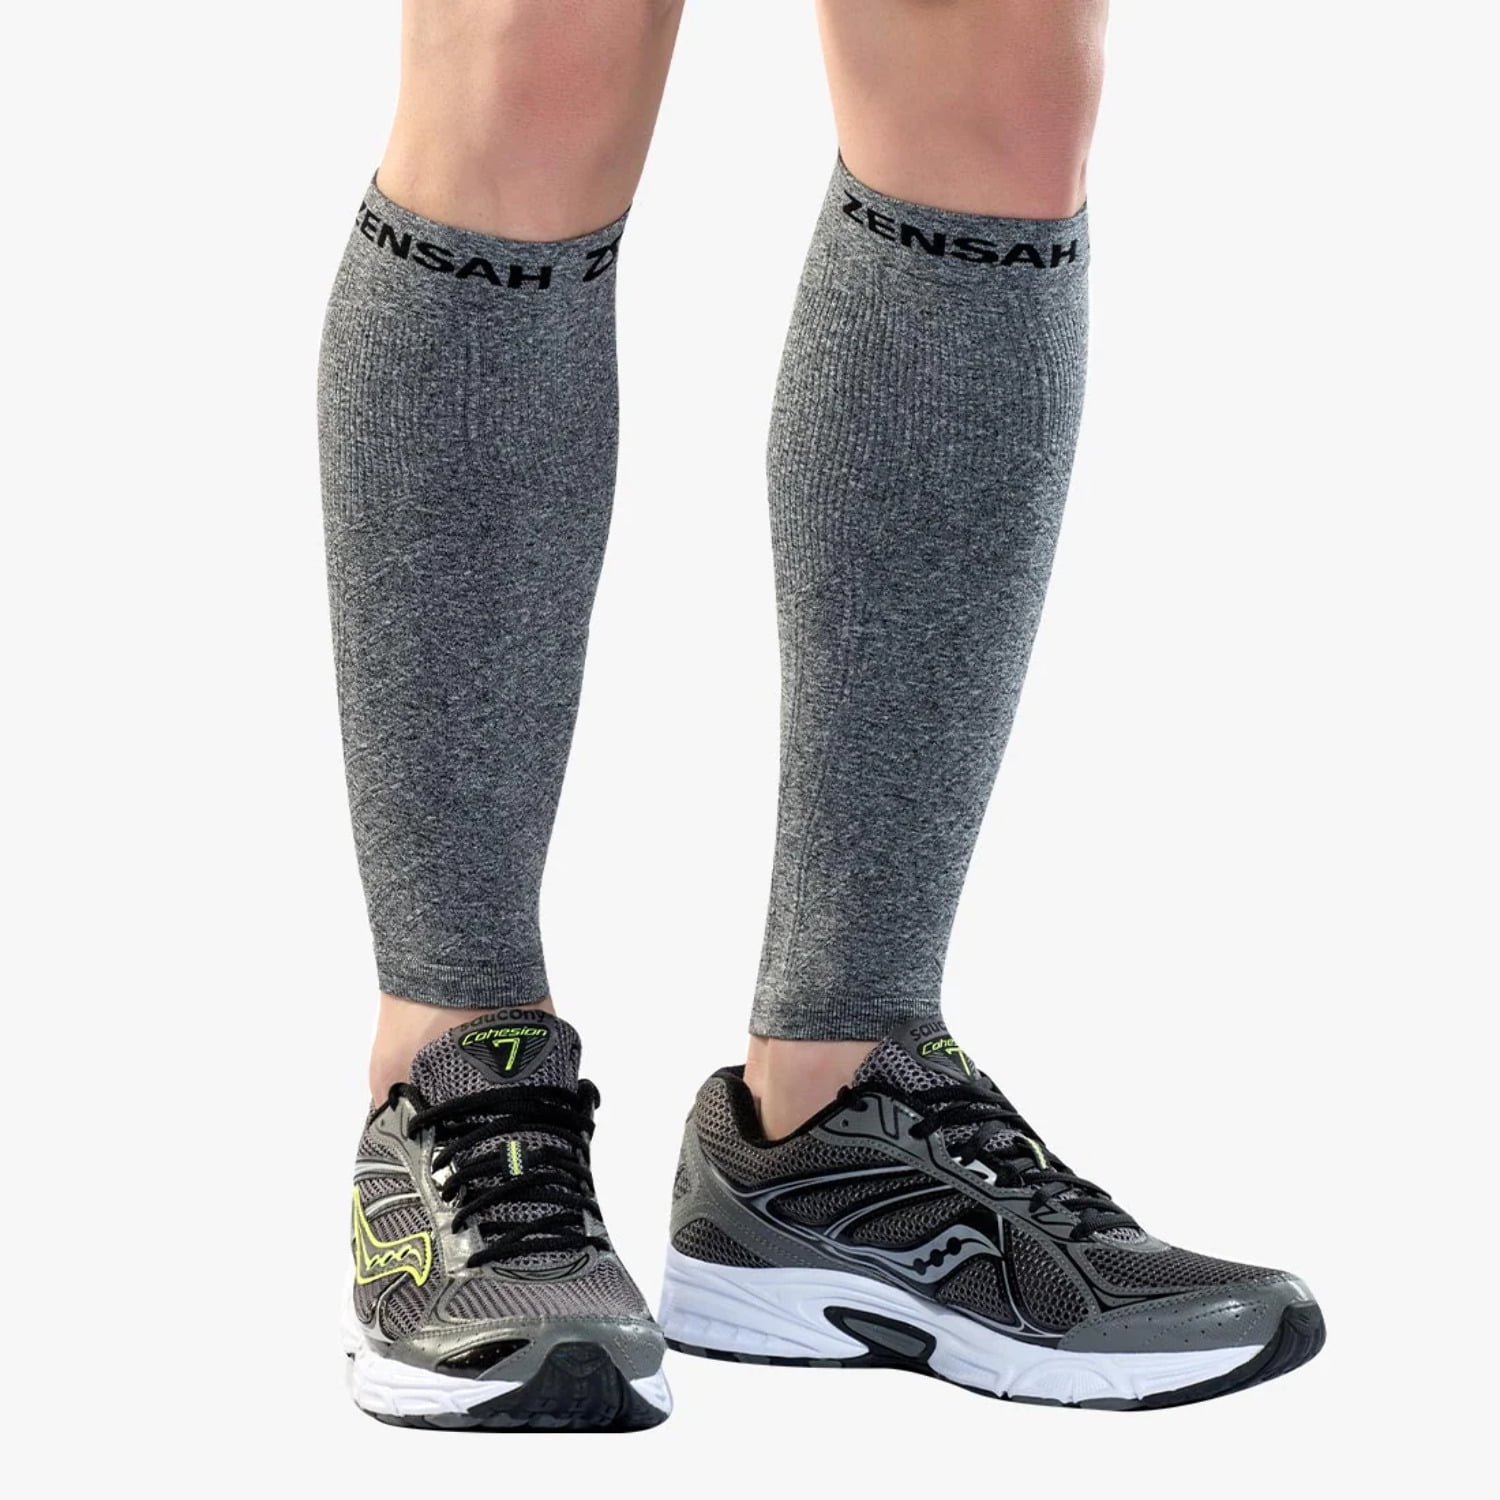  Zensah Running Leg Compression Sleeves - Shin Splint, Calf  Compression Sleeve Men And Women